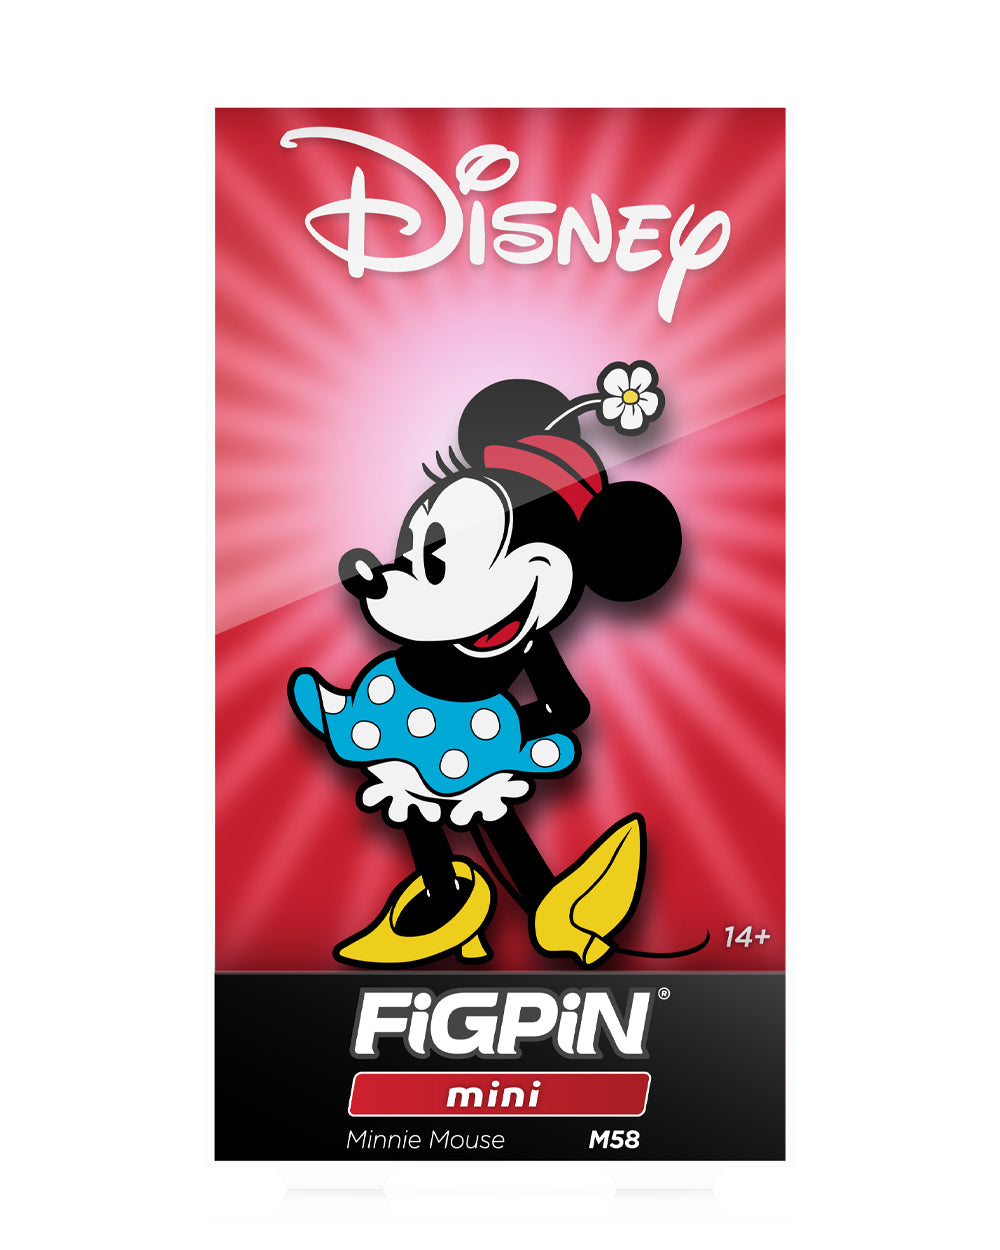 FiGPiN Mini - Minnie Mouse #M58 - The Pink a la Mode - Figpin - The Pink a la Mode